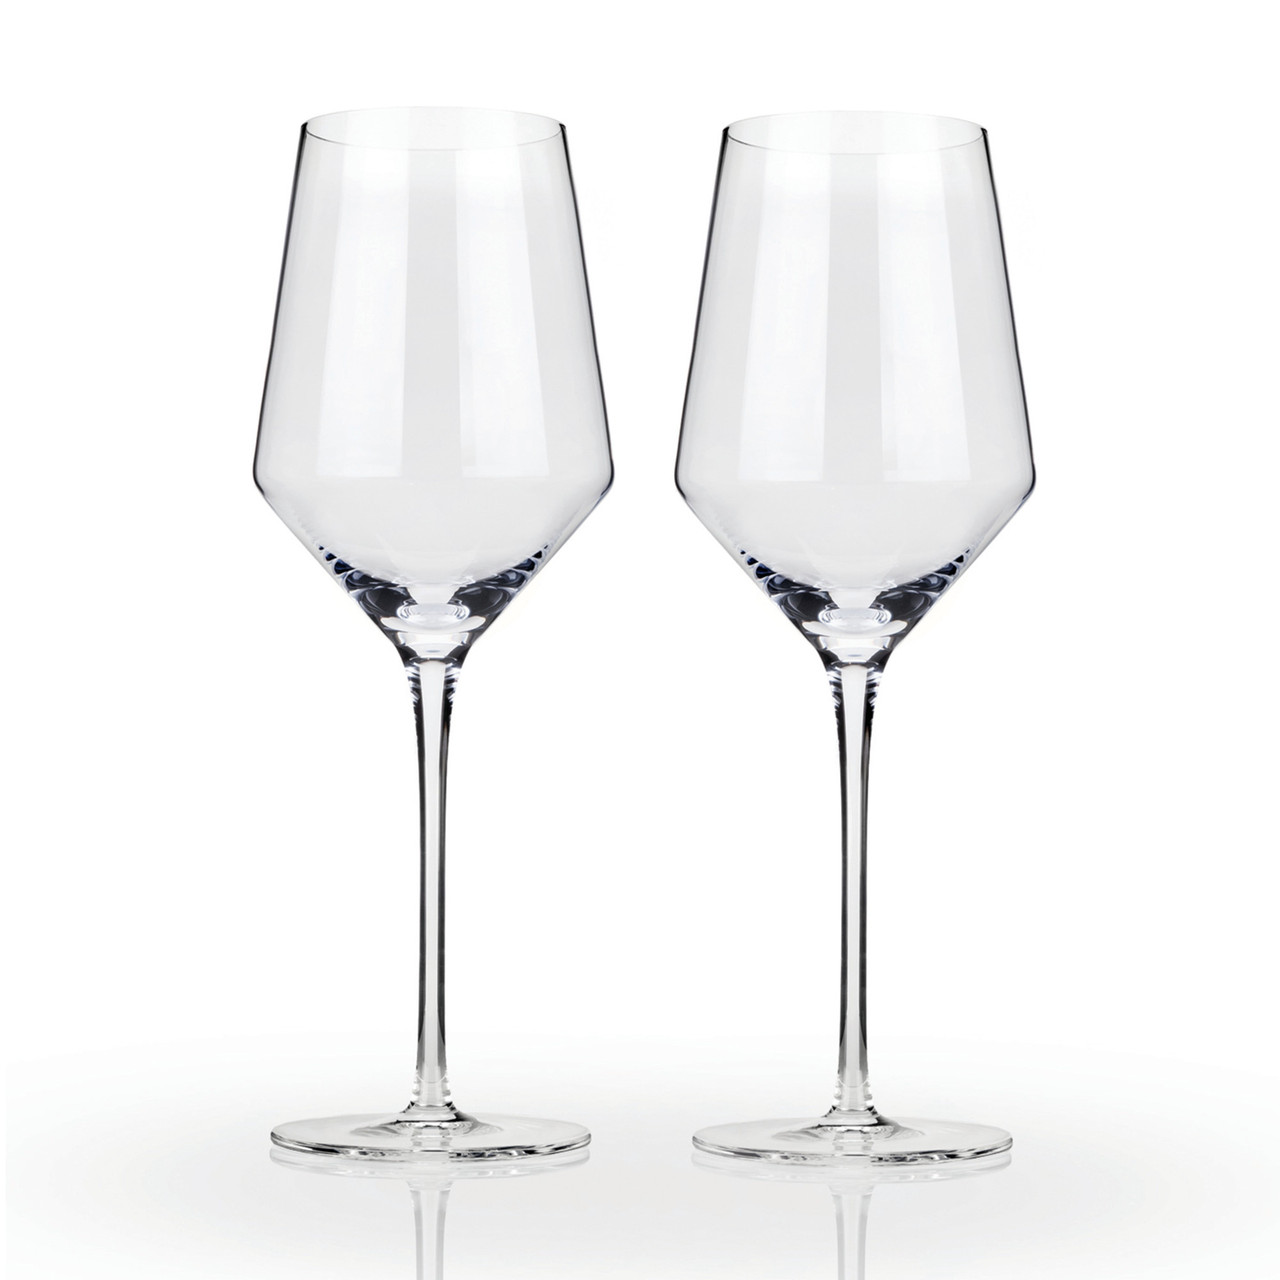 Angled Crystal Chardonnay Glasses by Viski®